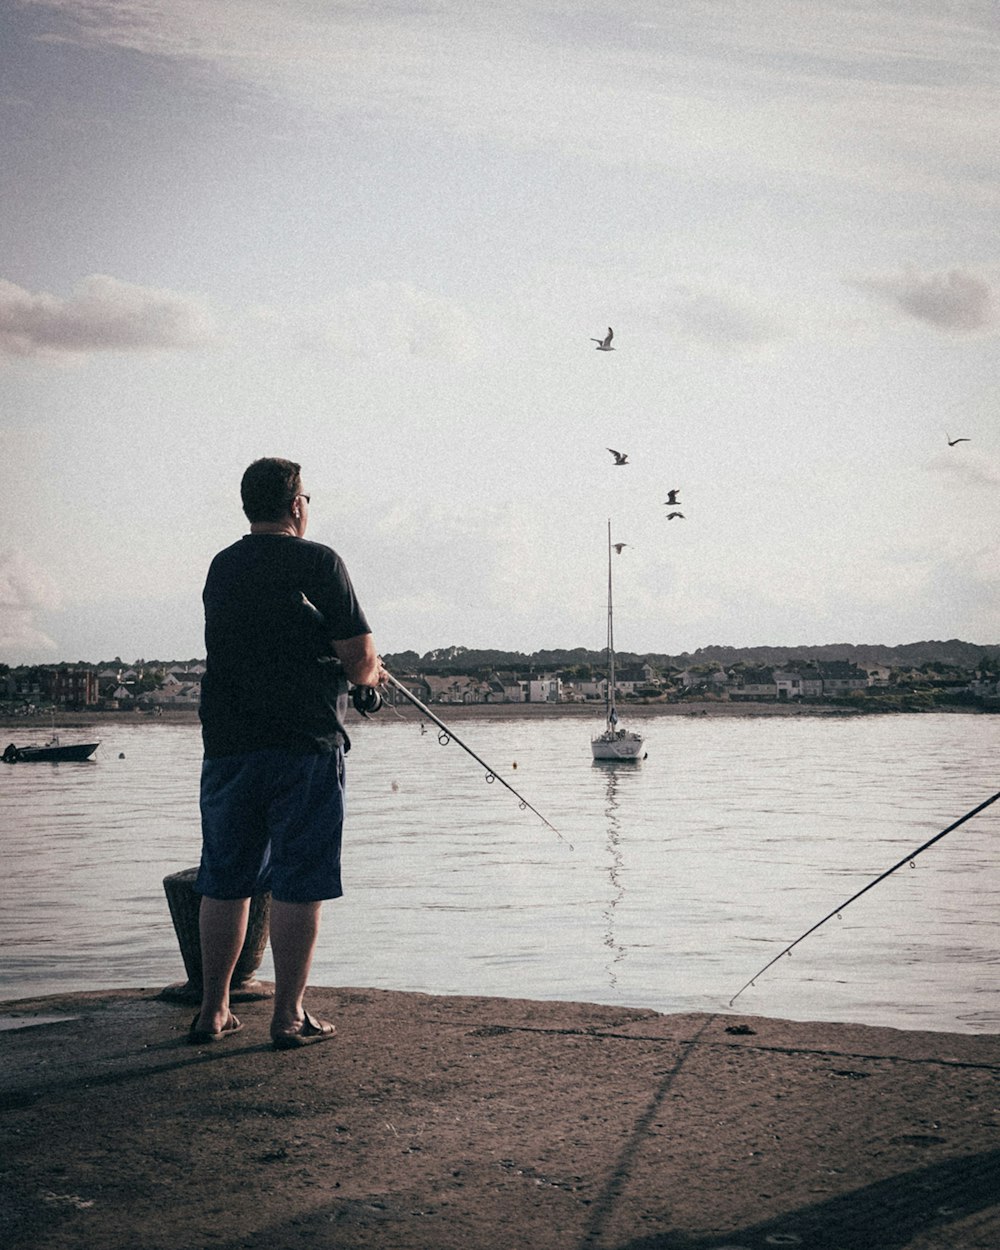 man in black shirt and blue shorts fishing on lake during daytime